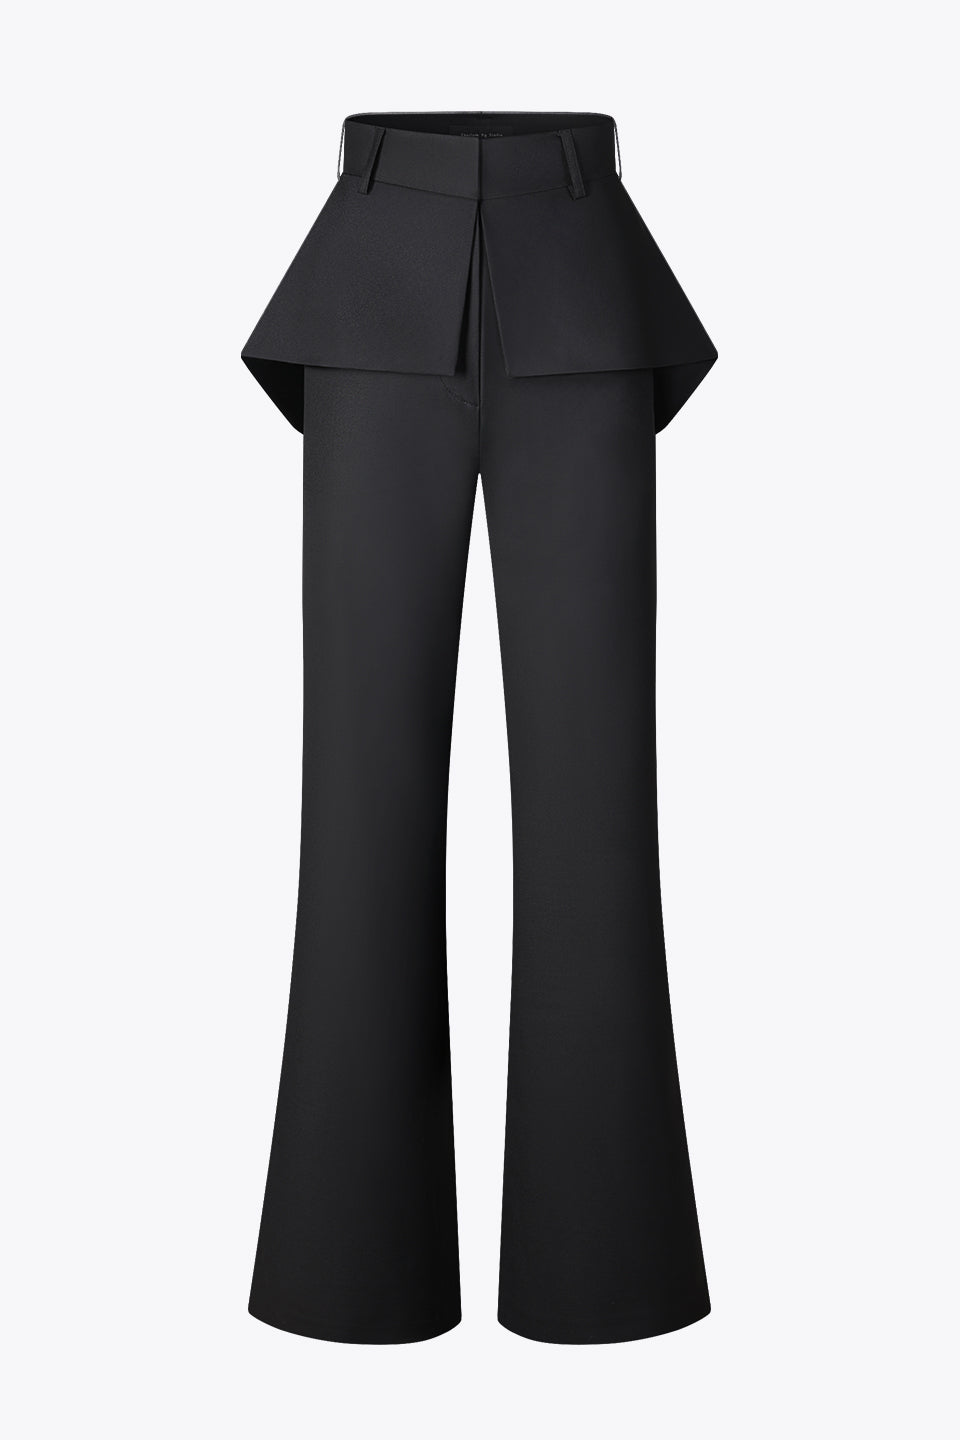 My Panel Trousers (Black)